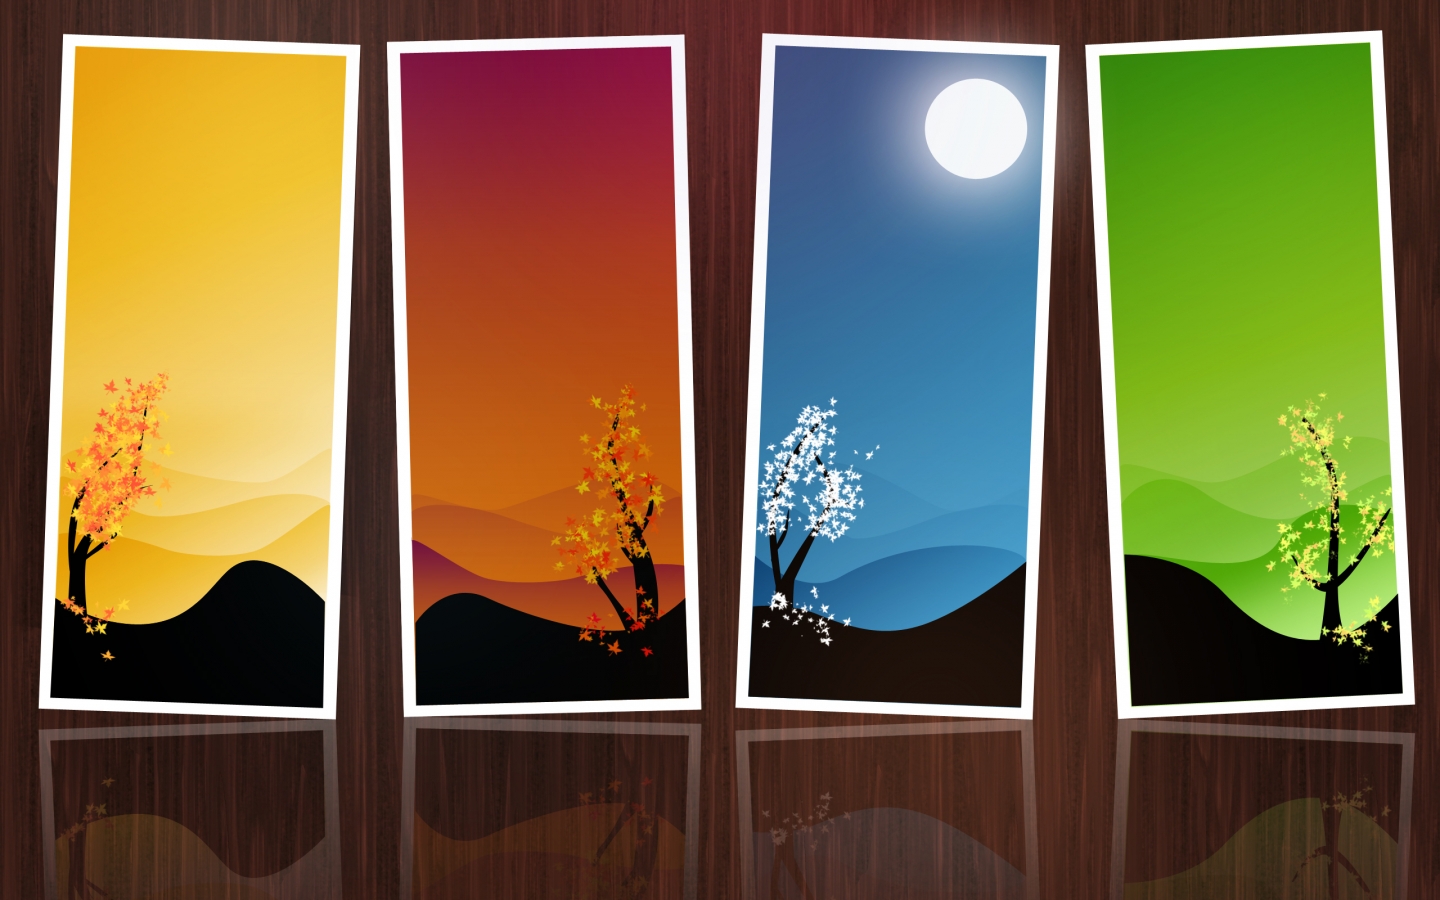 4 Seasons Frames for 1440 x 900 widescreen resolution